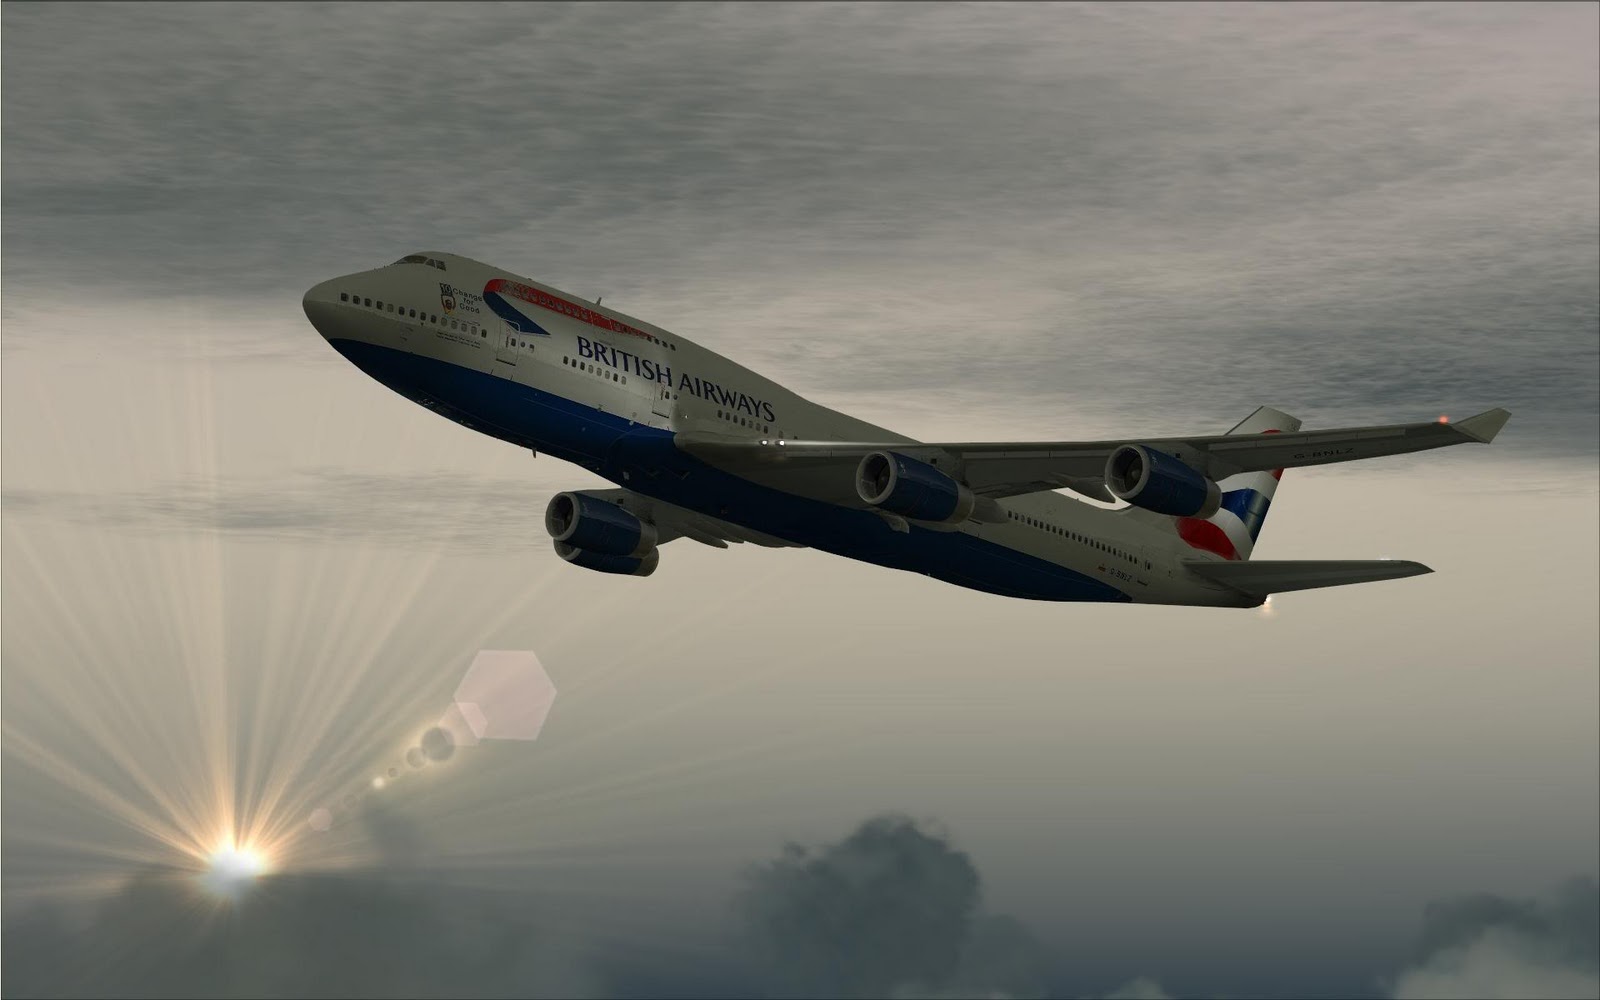 FS2004 Flight Simulator 2004 ISO Full Game Repack By 108